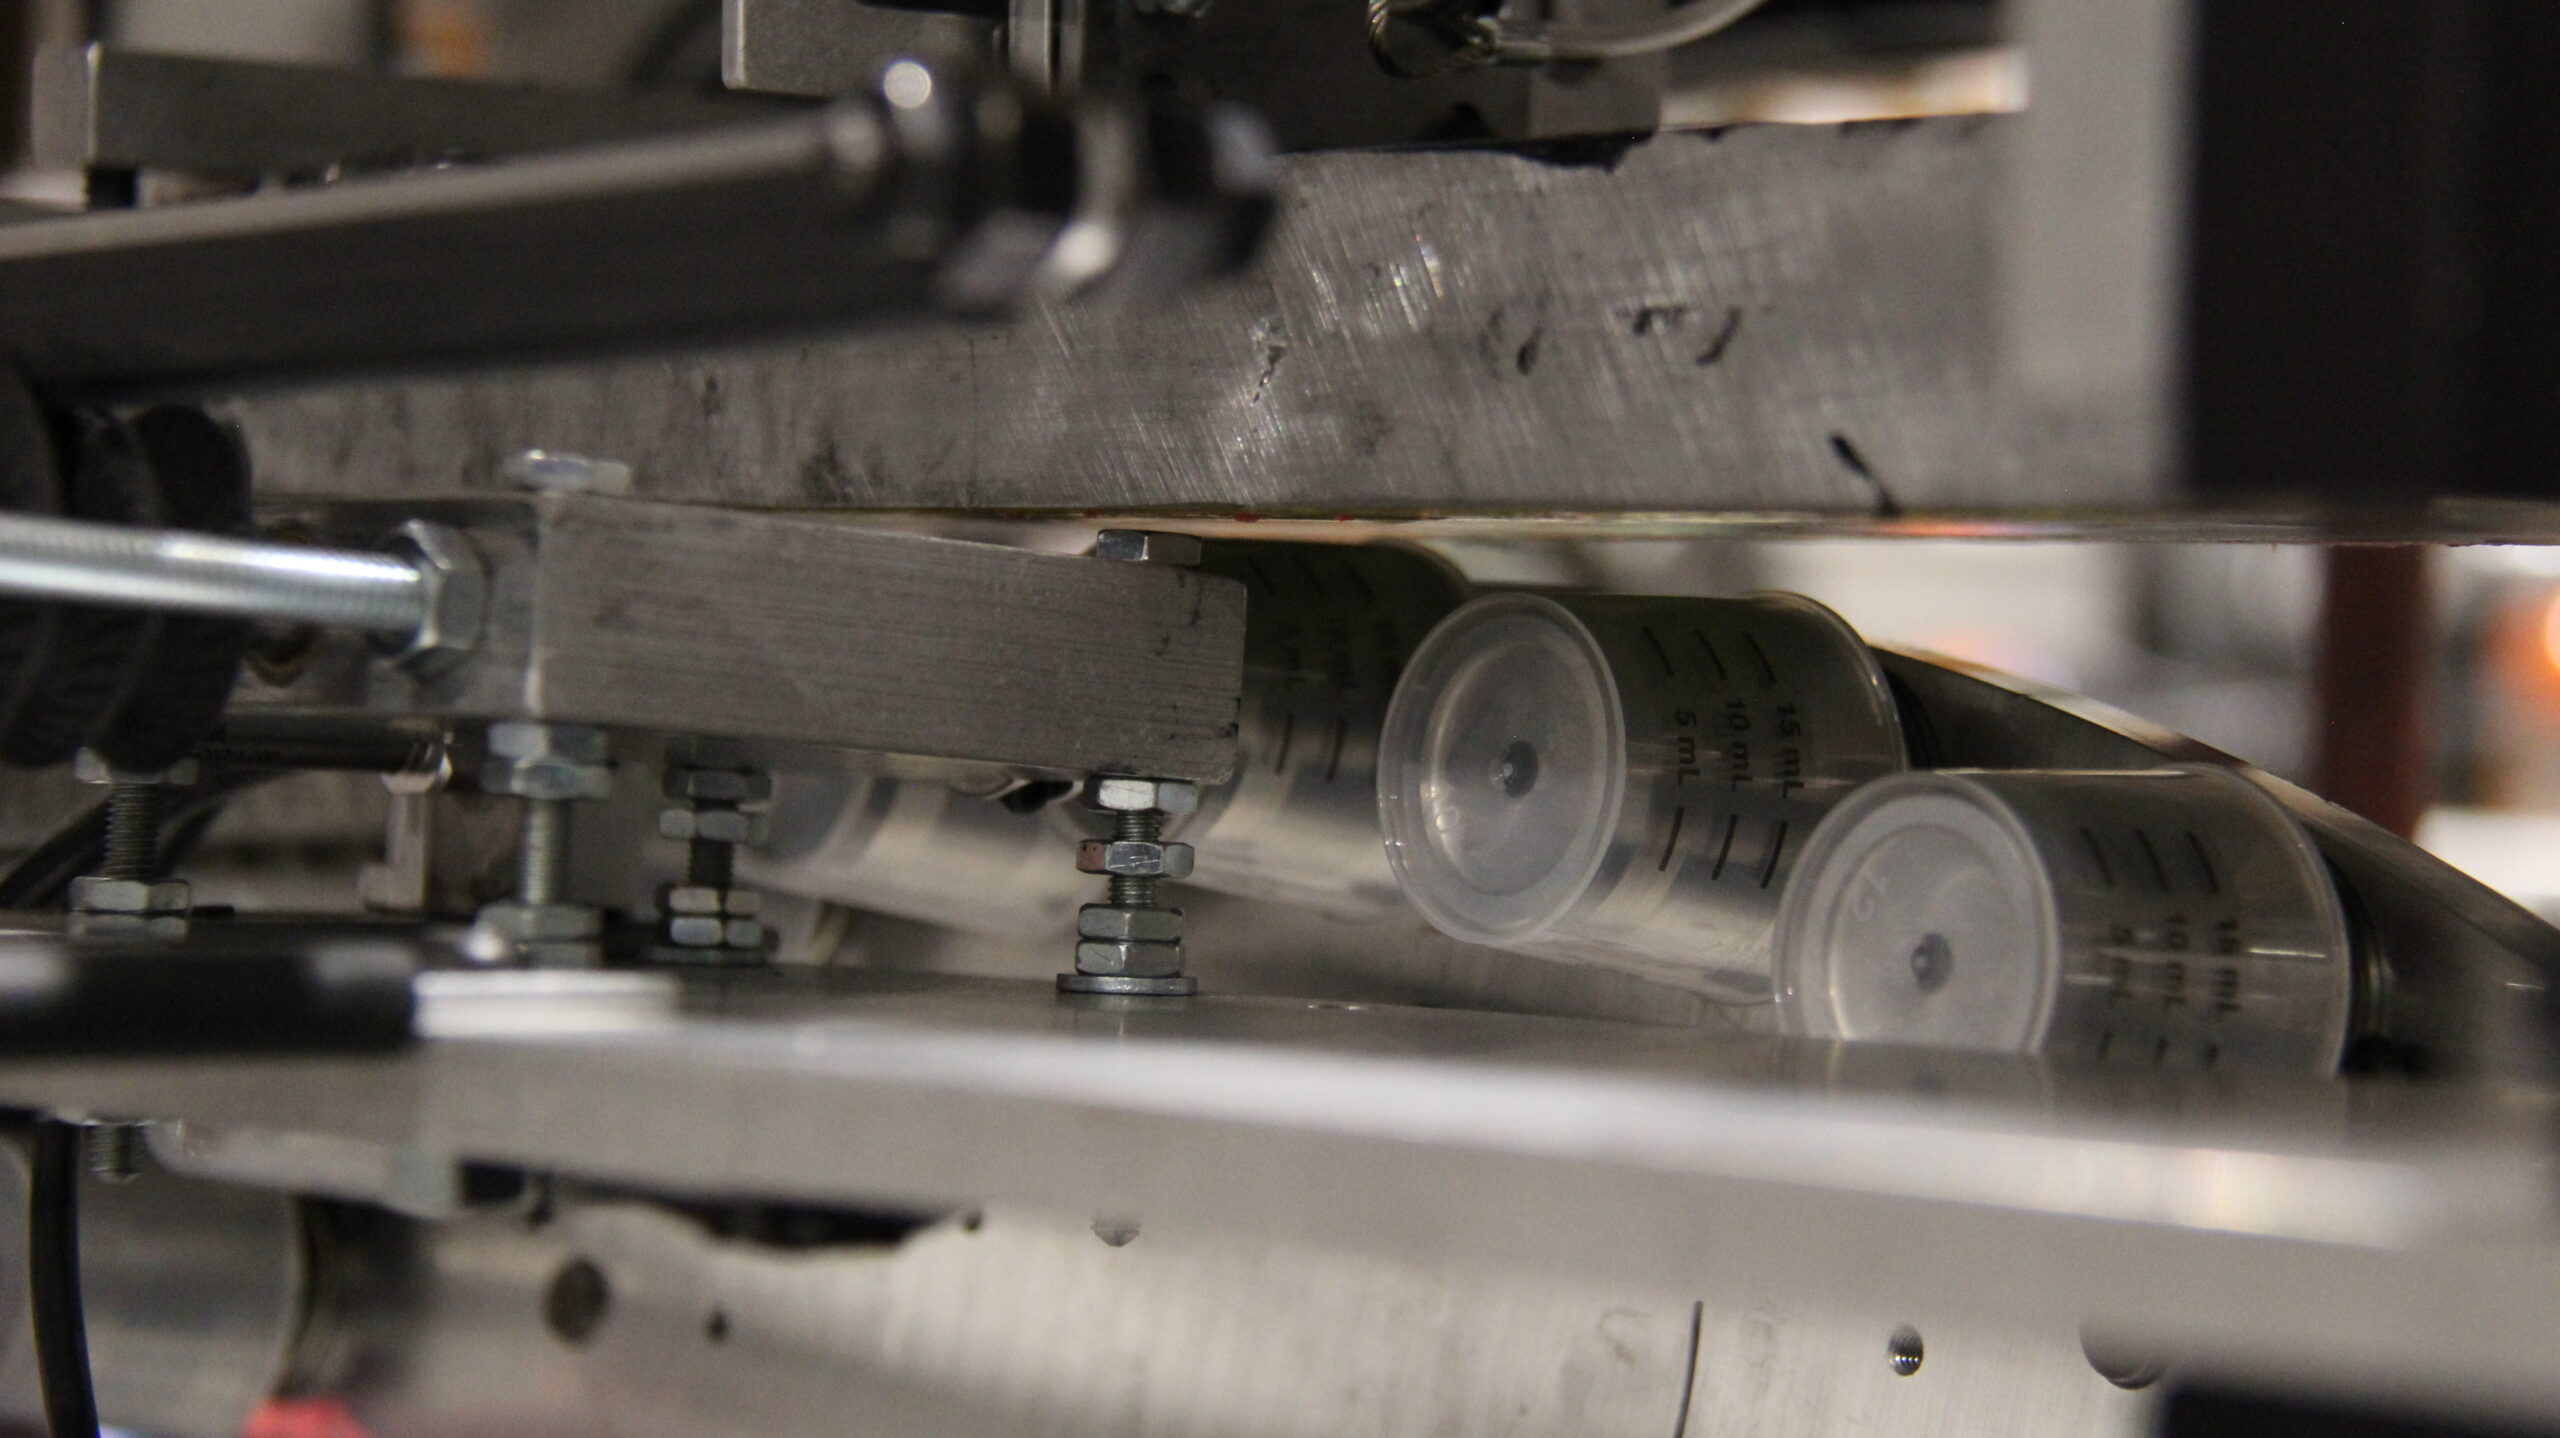 vinci, vinci 1452, dosage cups, screen printing, cylindrical automatic printer